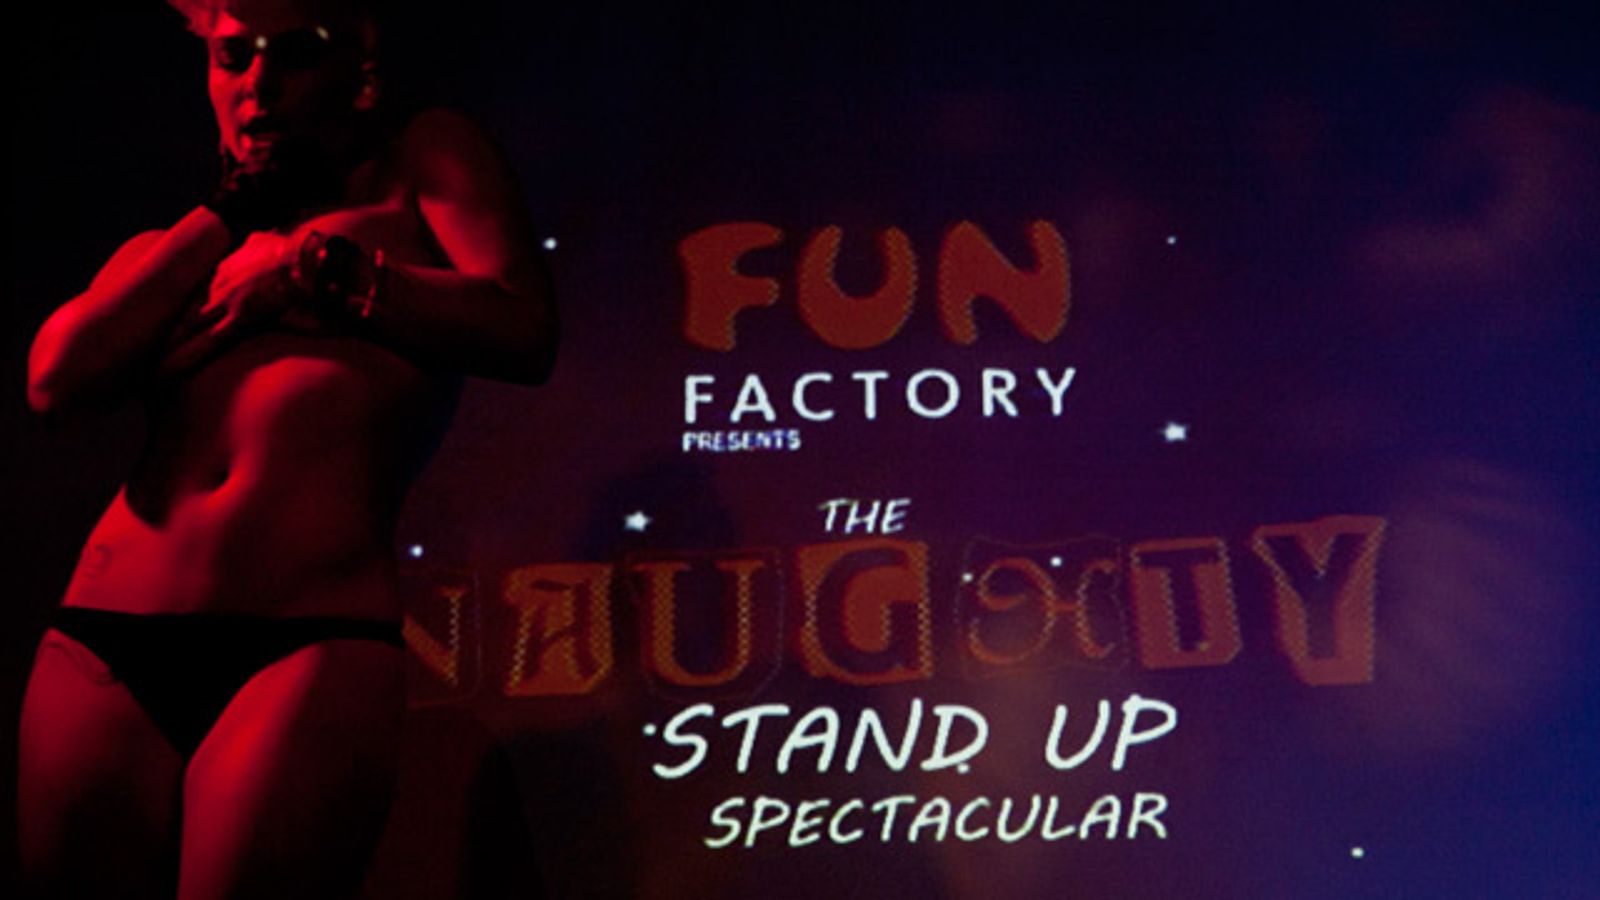 Fun Factory Sponsors Naughty Show on Dec. 1